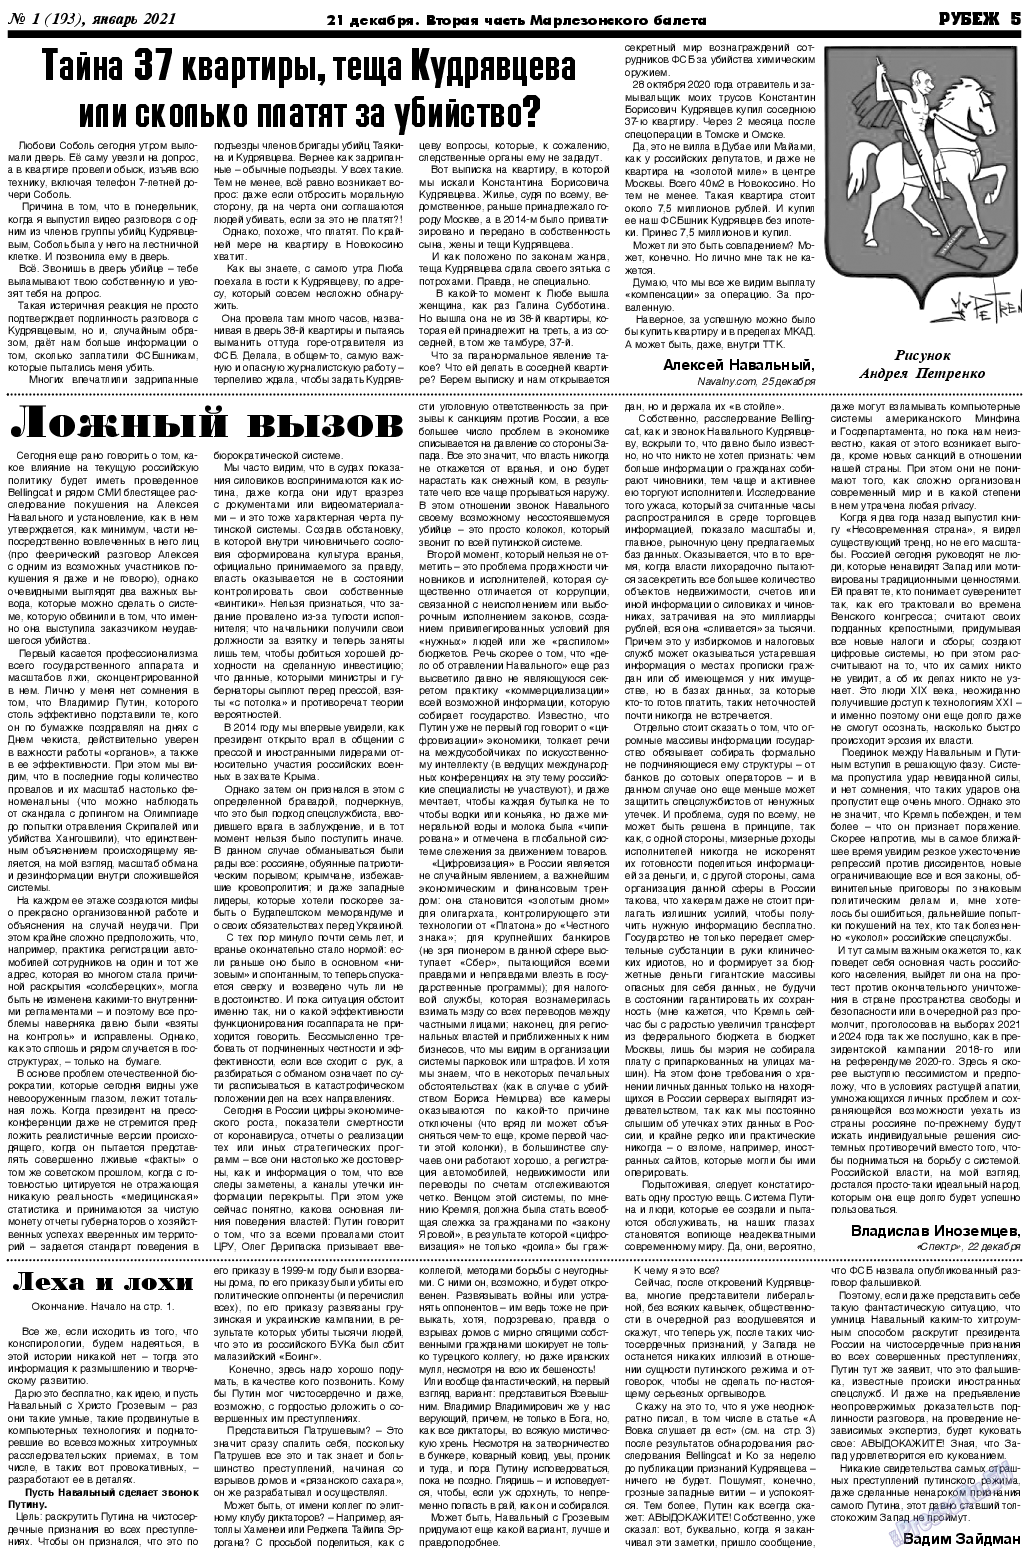 Рубеж, газета. 2021 №1 стр.5